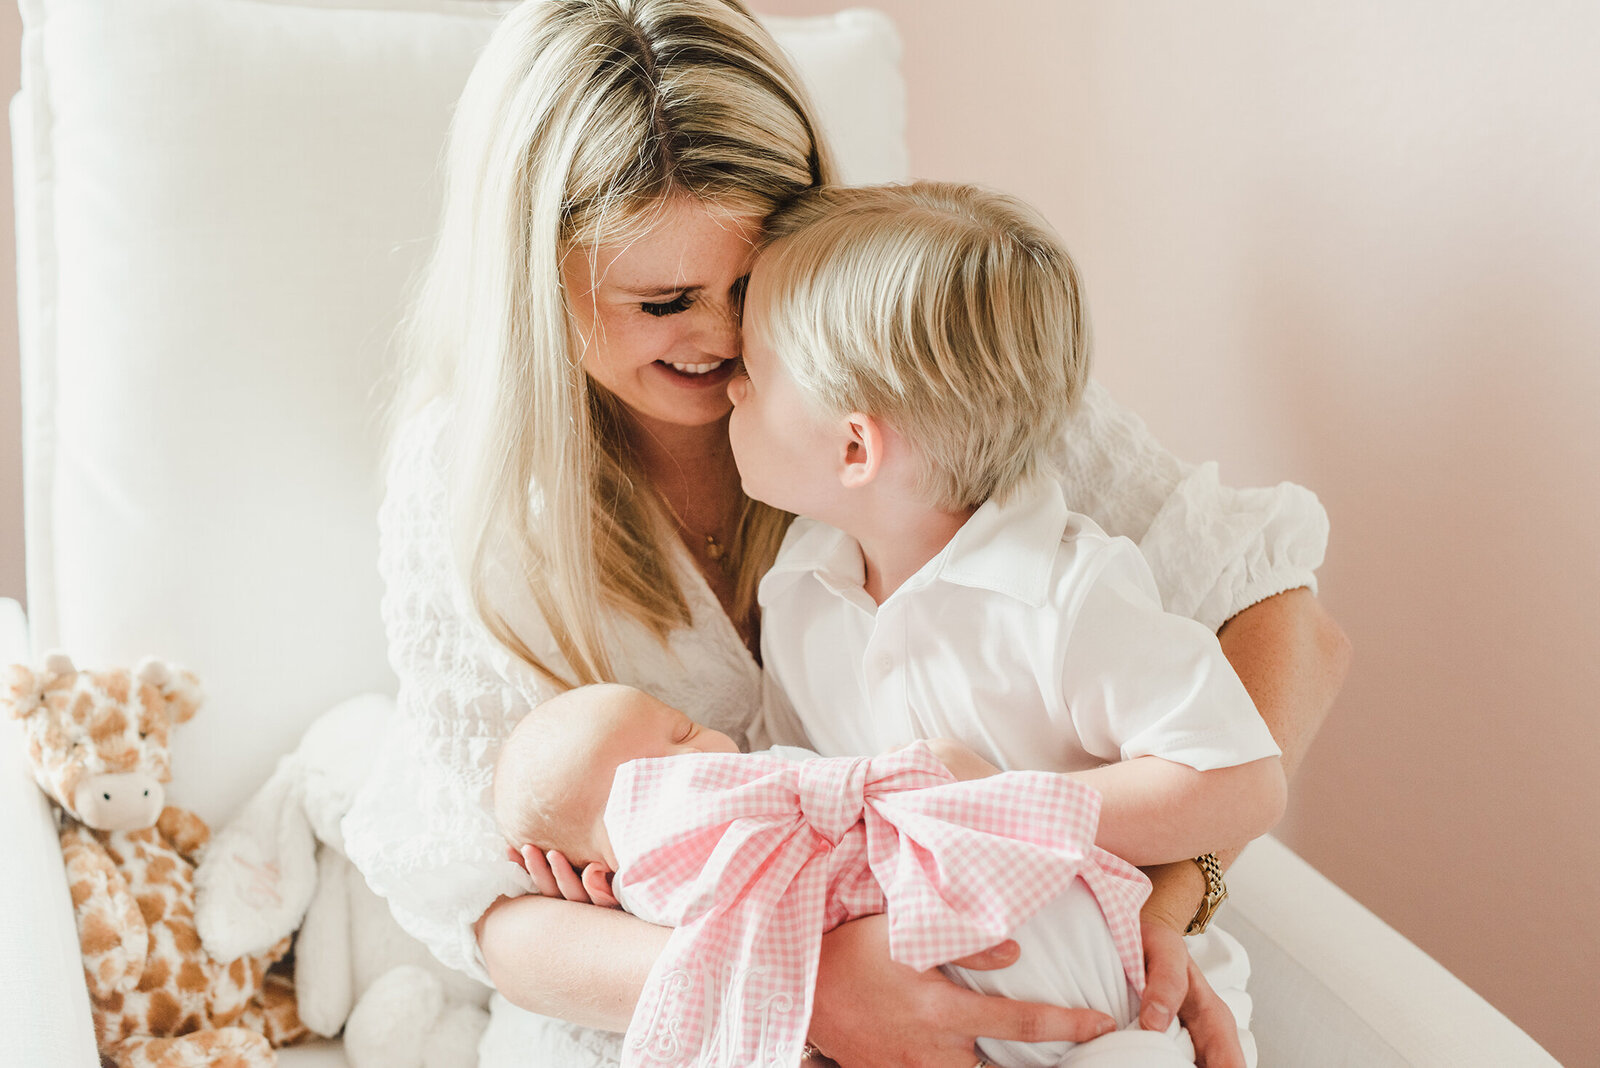 Home | Dallas Family + Newborn Photographer | Lindsay Davenport